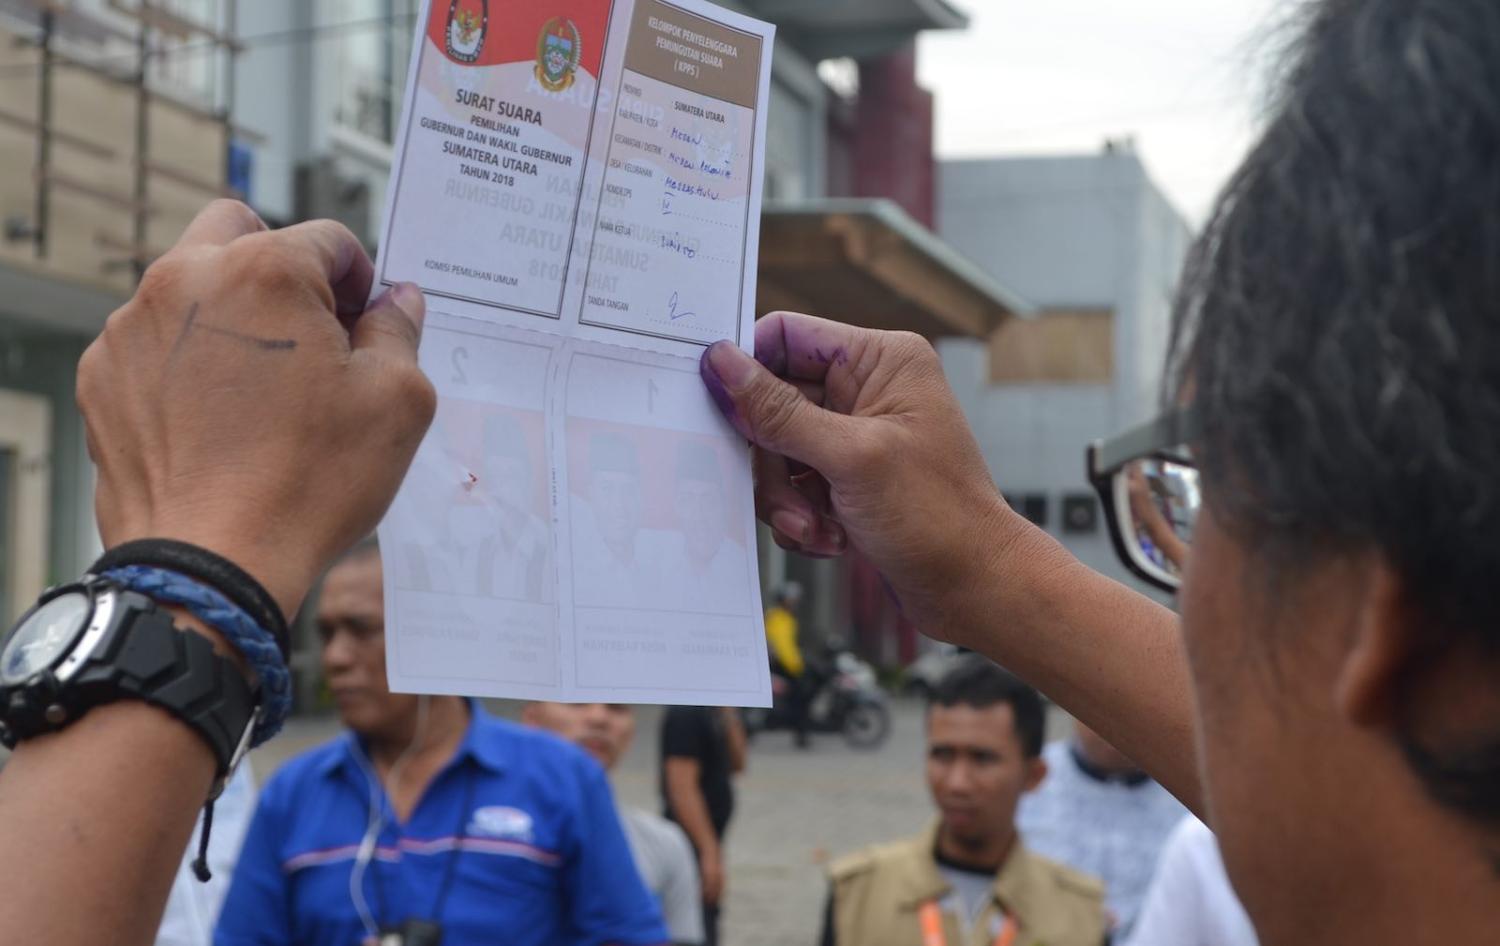 Madras Hulu polling station in Medan on 27 June (Photo: Teguh Harahap)